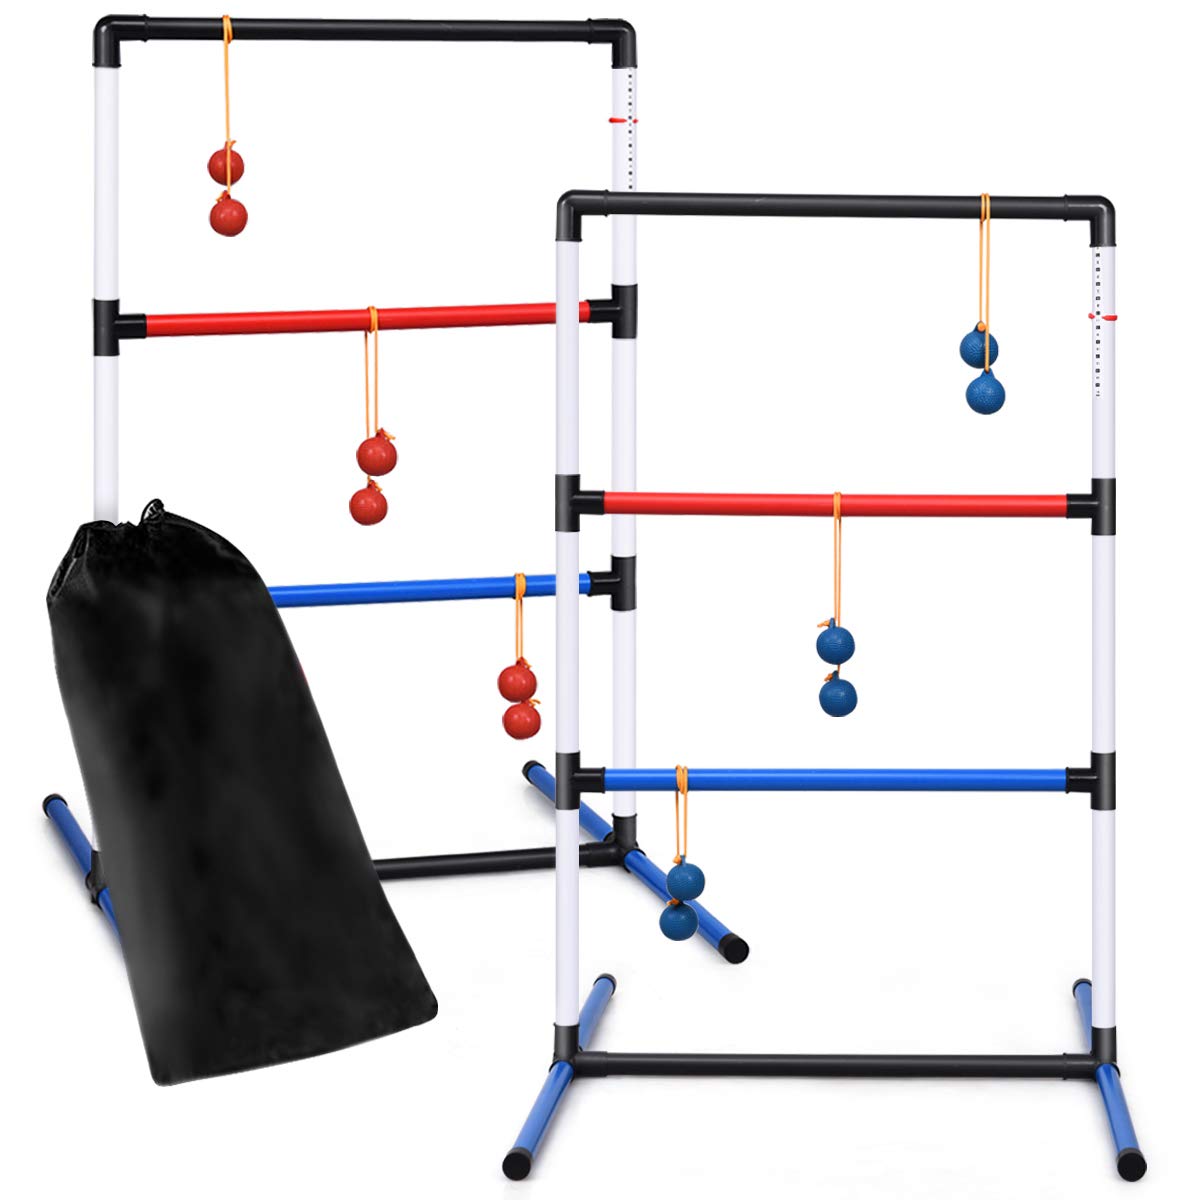 Ladder Toss Game Set, Indoor/Outdoor Ladder Ball Toss Game Set - GoplusUS